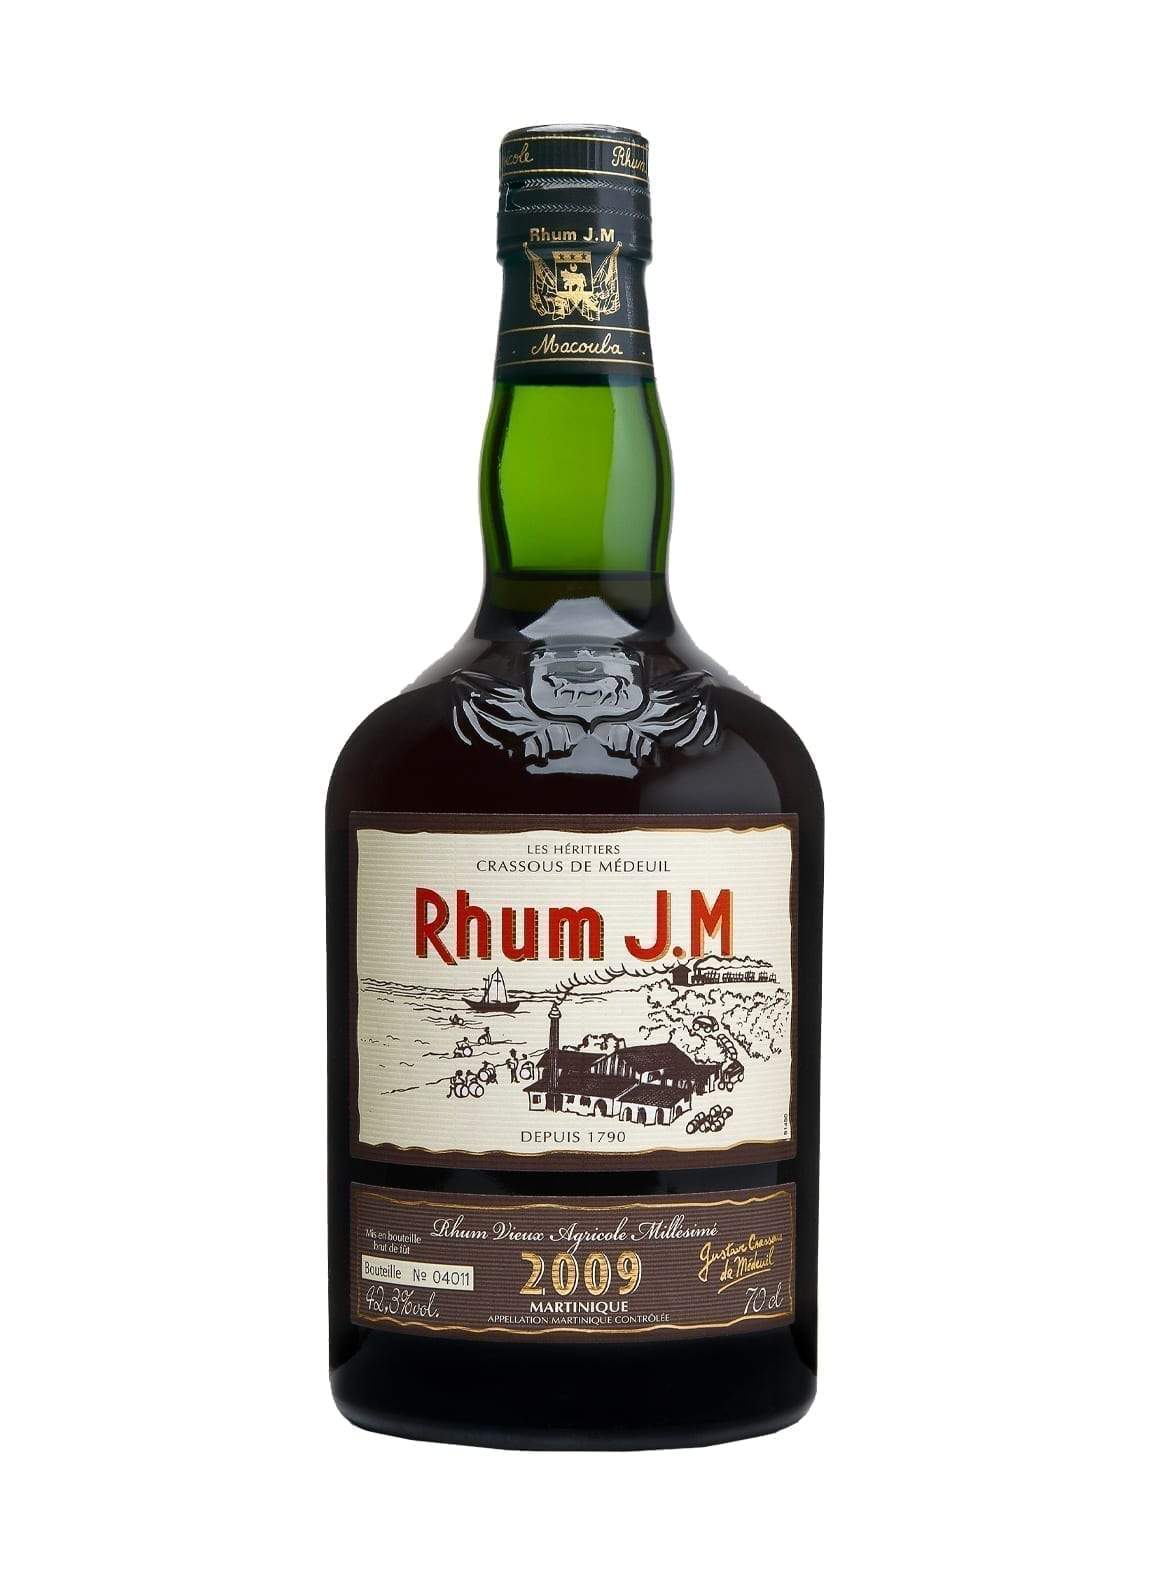 J.M Rhum Agricole 2009 Bourbon Cask Finish 42.3% 700ml | Rum | Shop online at Spirits of France